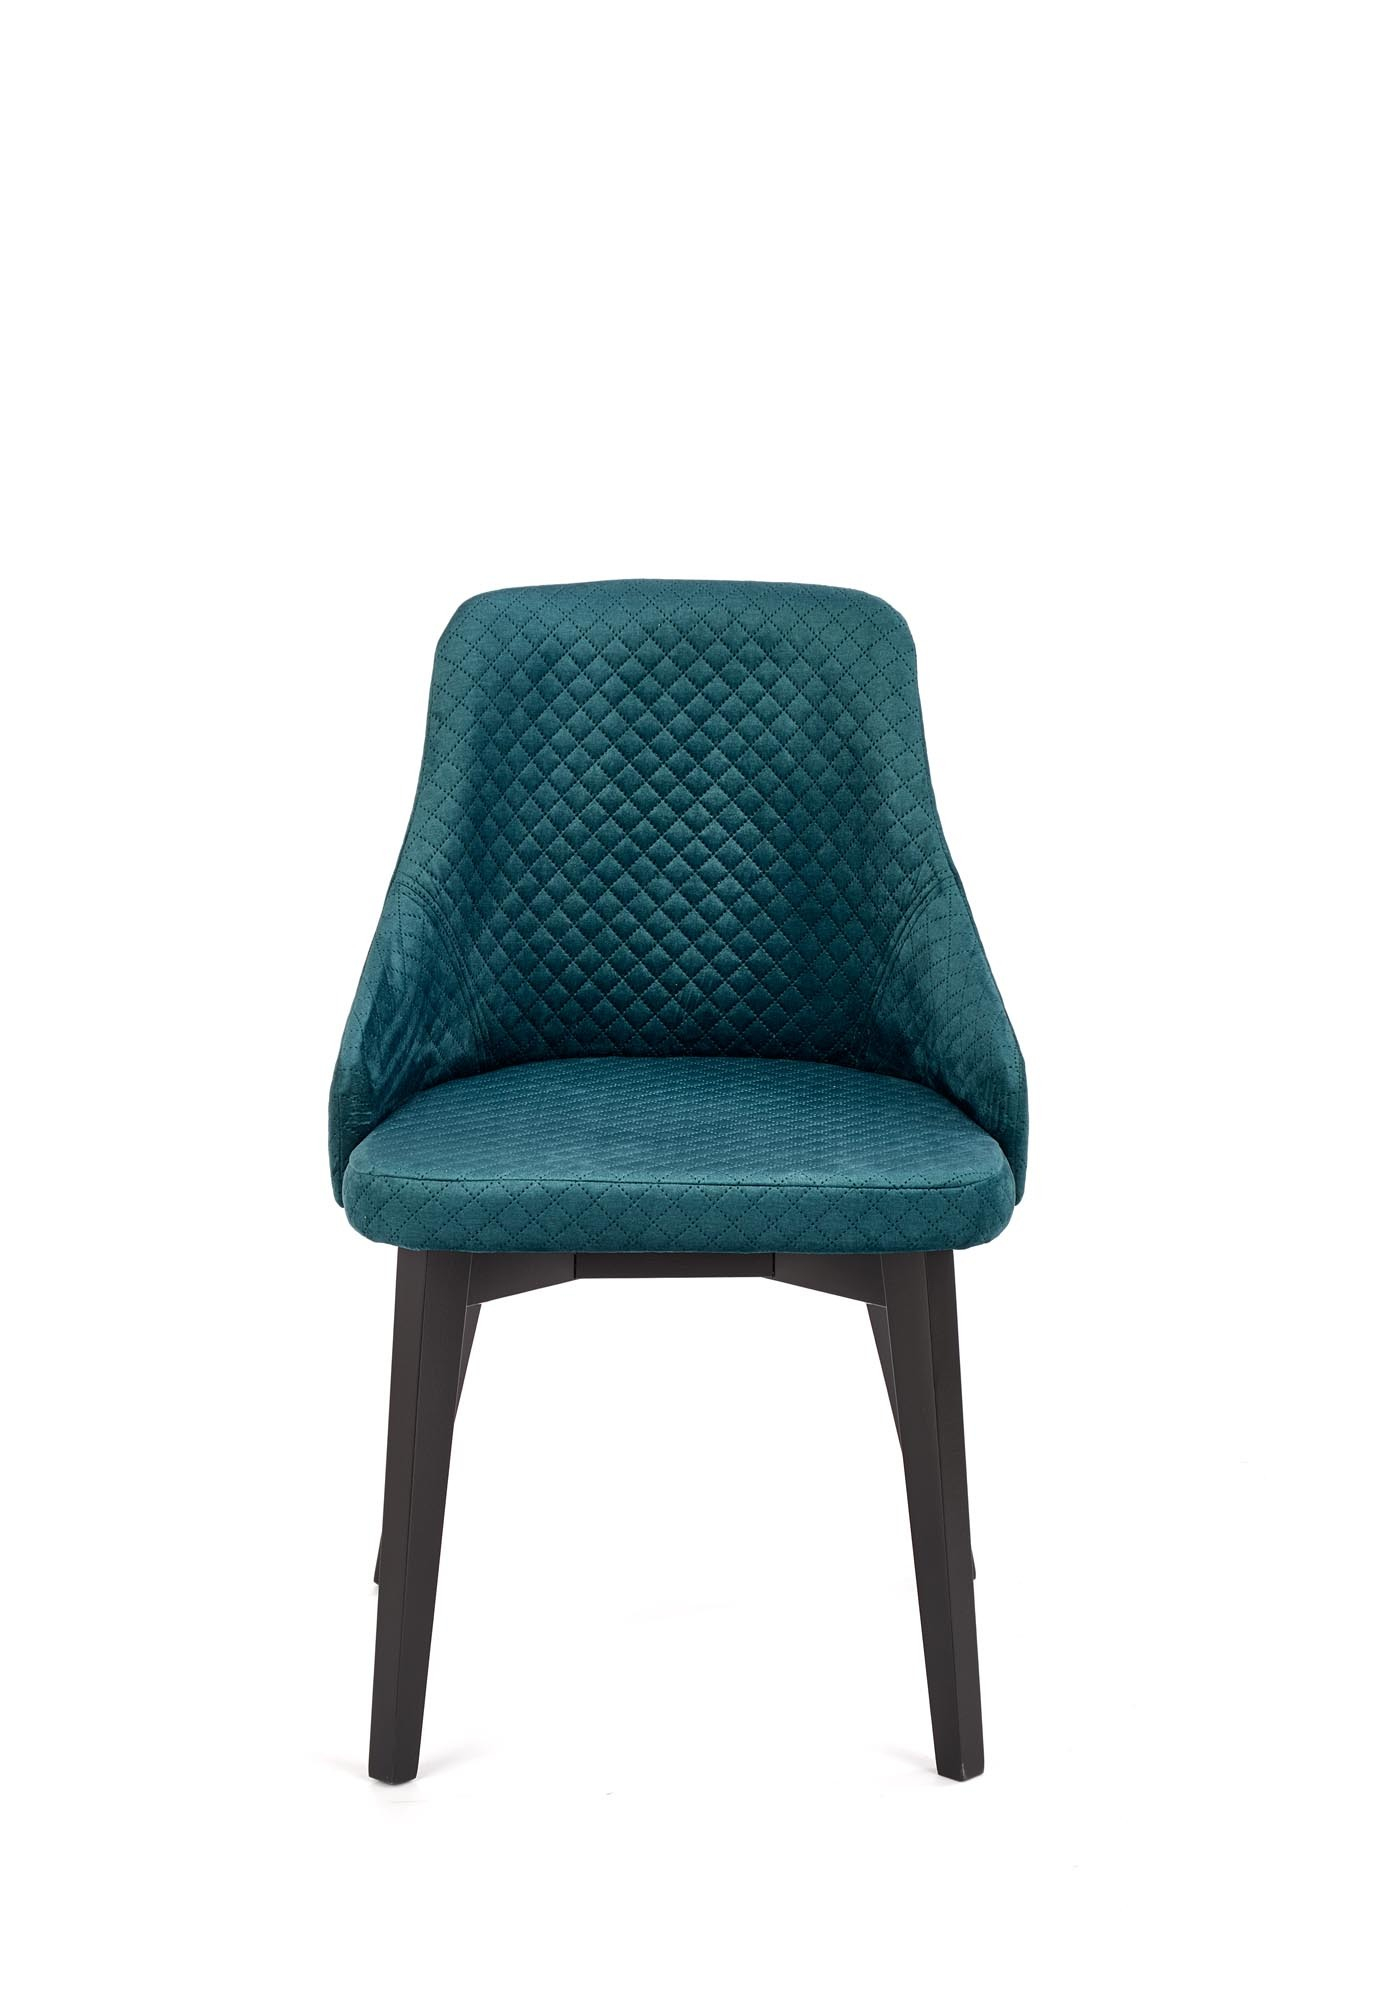 TOLEDO 3 krzesło czarny / tap. velvet pikowany Karo 4 - MONOLITH 37 (ciemny zielony) 